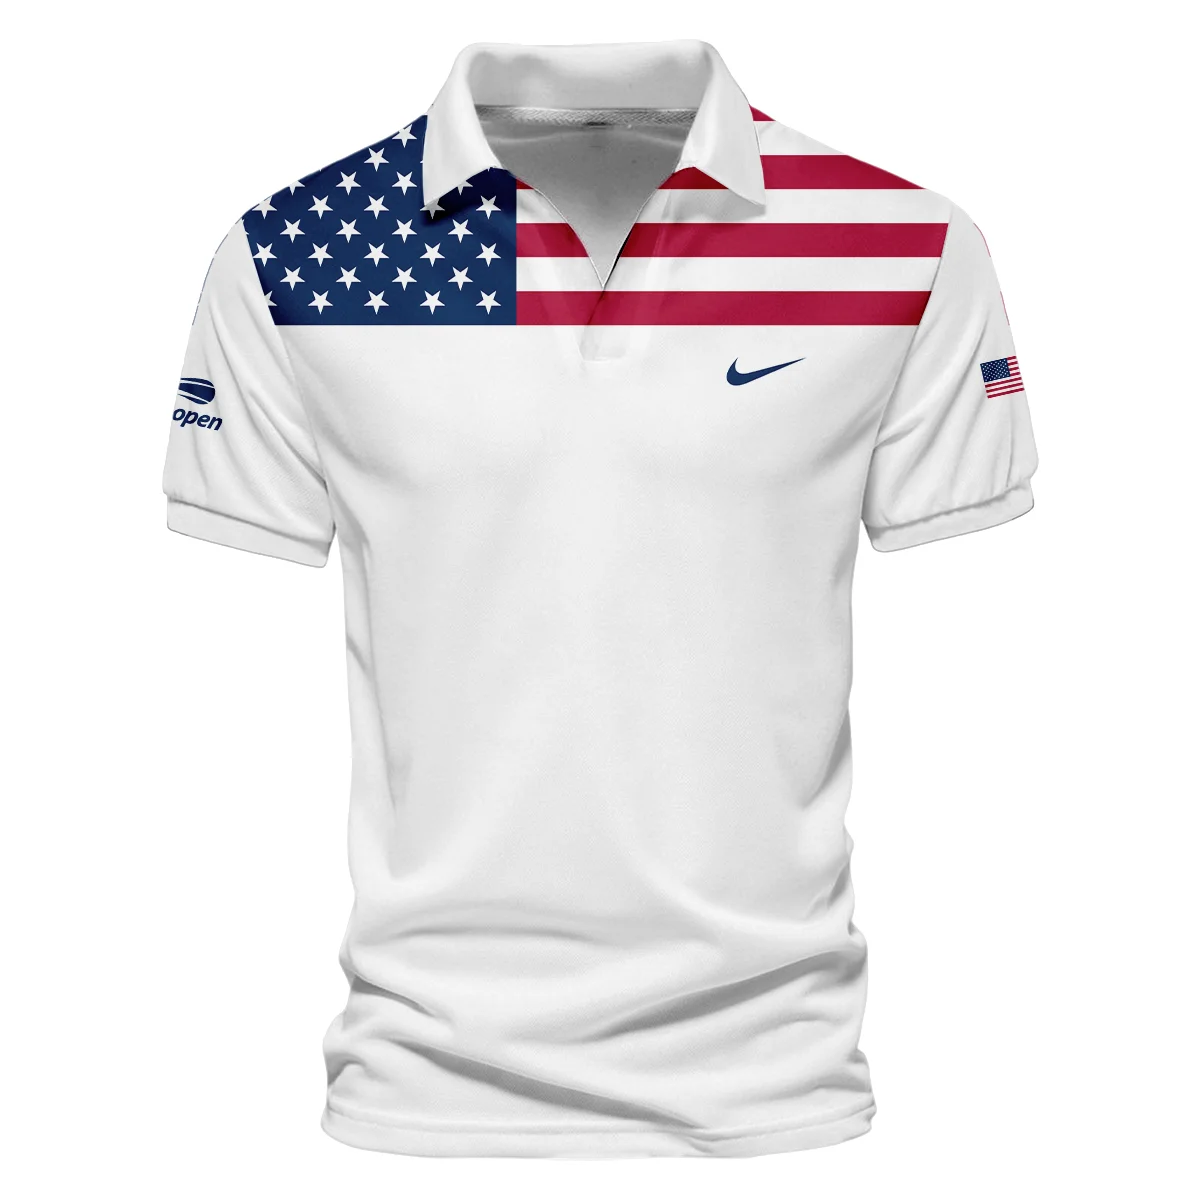 US Open Tennis Champions Nike USA Flag White Quarter-Zip Jacket Style Classic Quarter-Zip Jacket